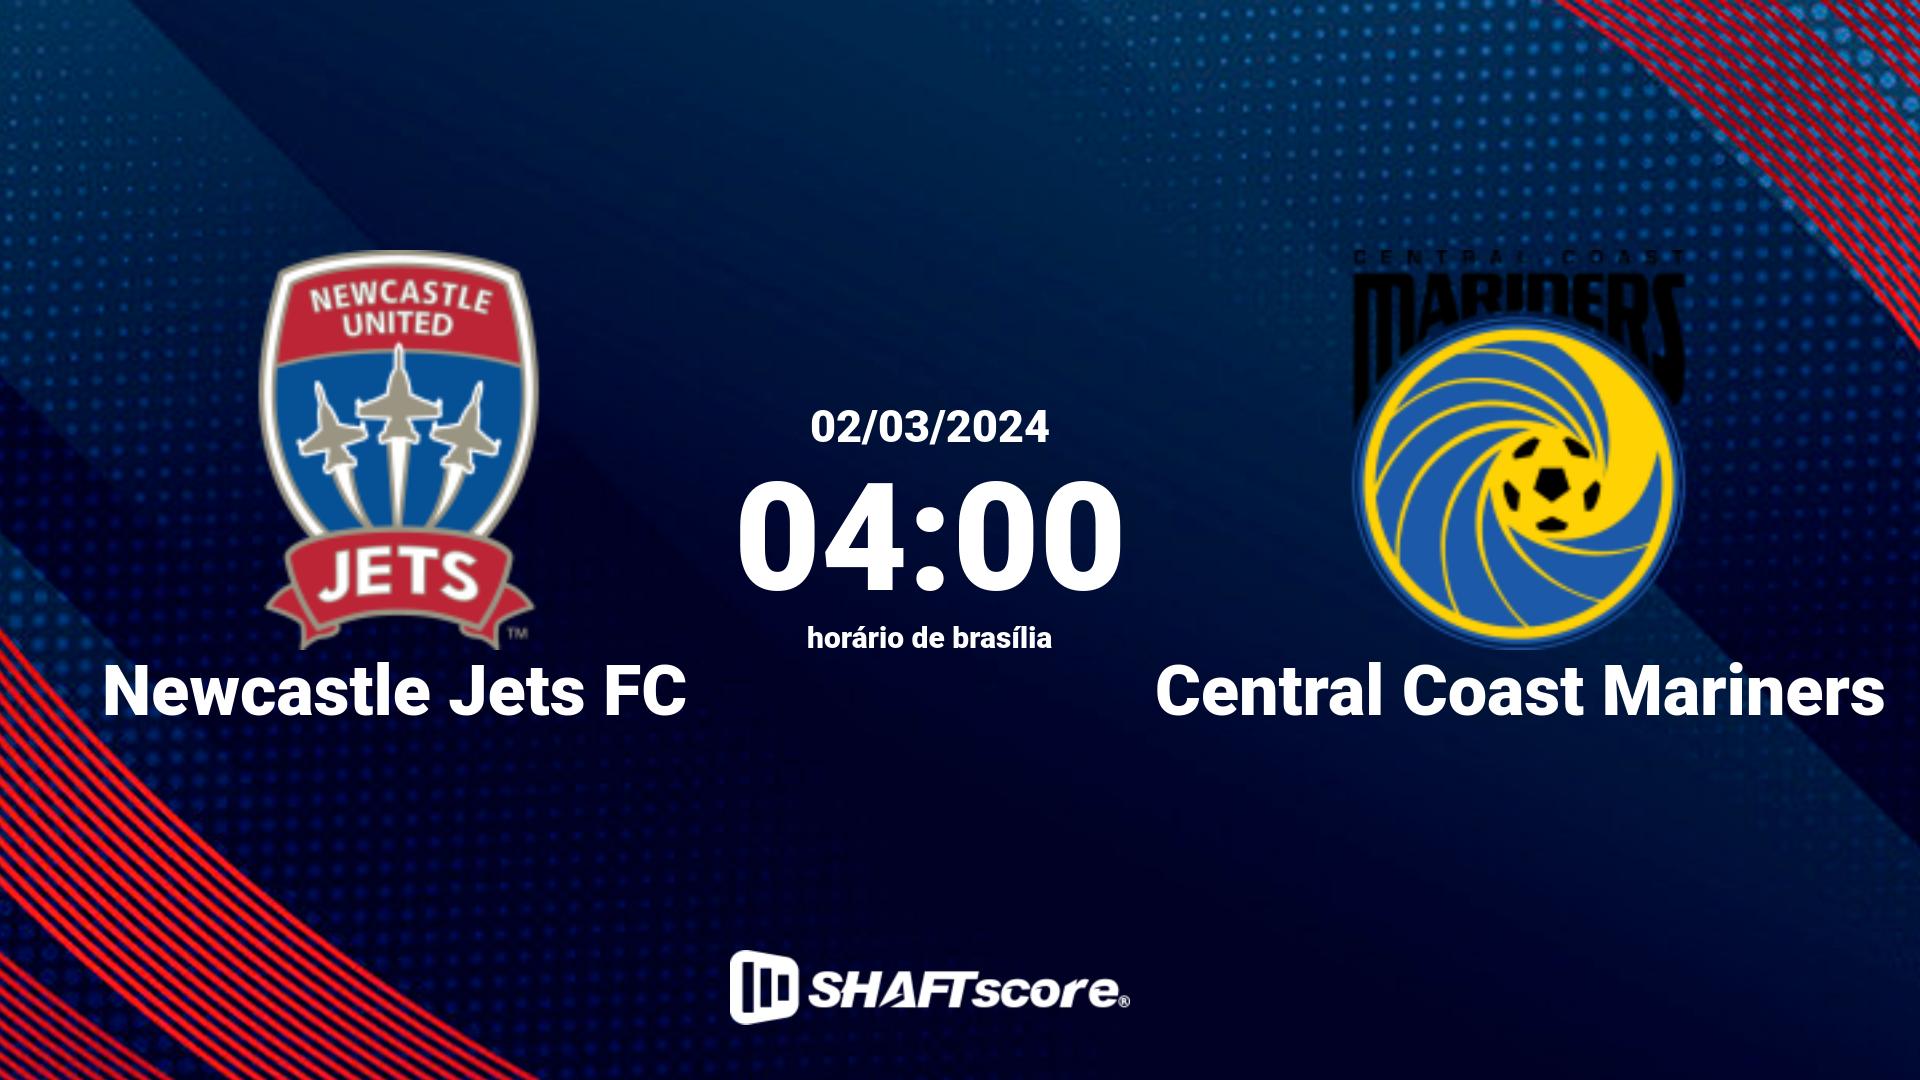 Estatísticas do jogo Newcastle Jets FC vs Central Coast Mariners 02.03 04:00